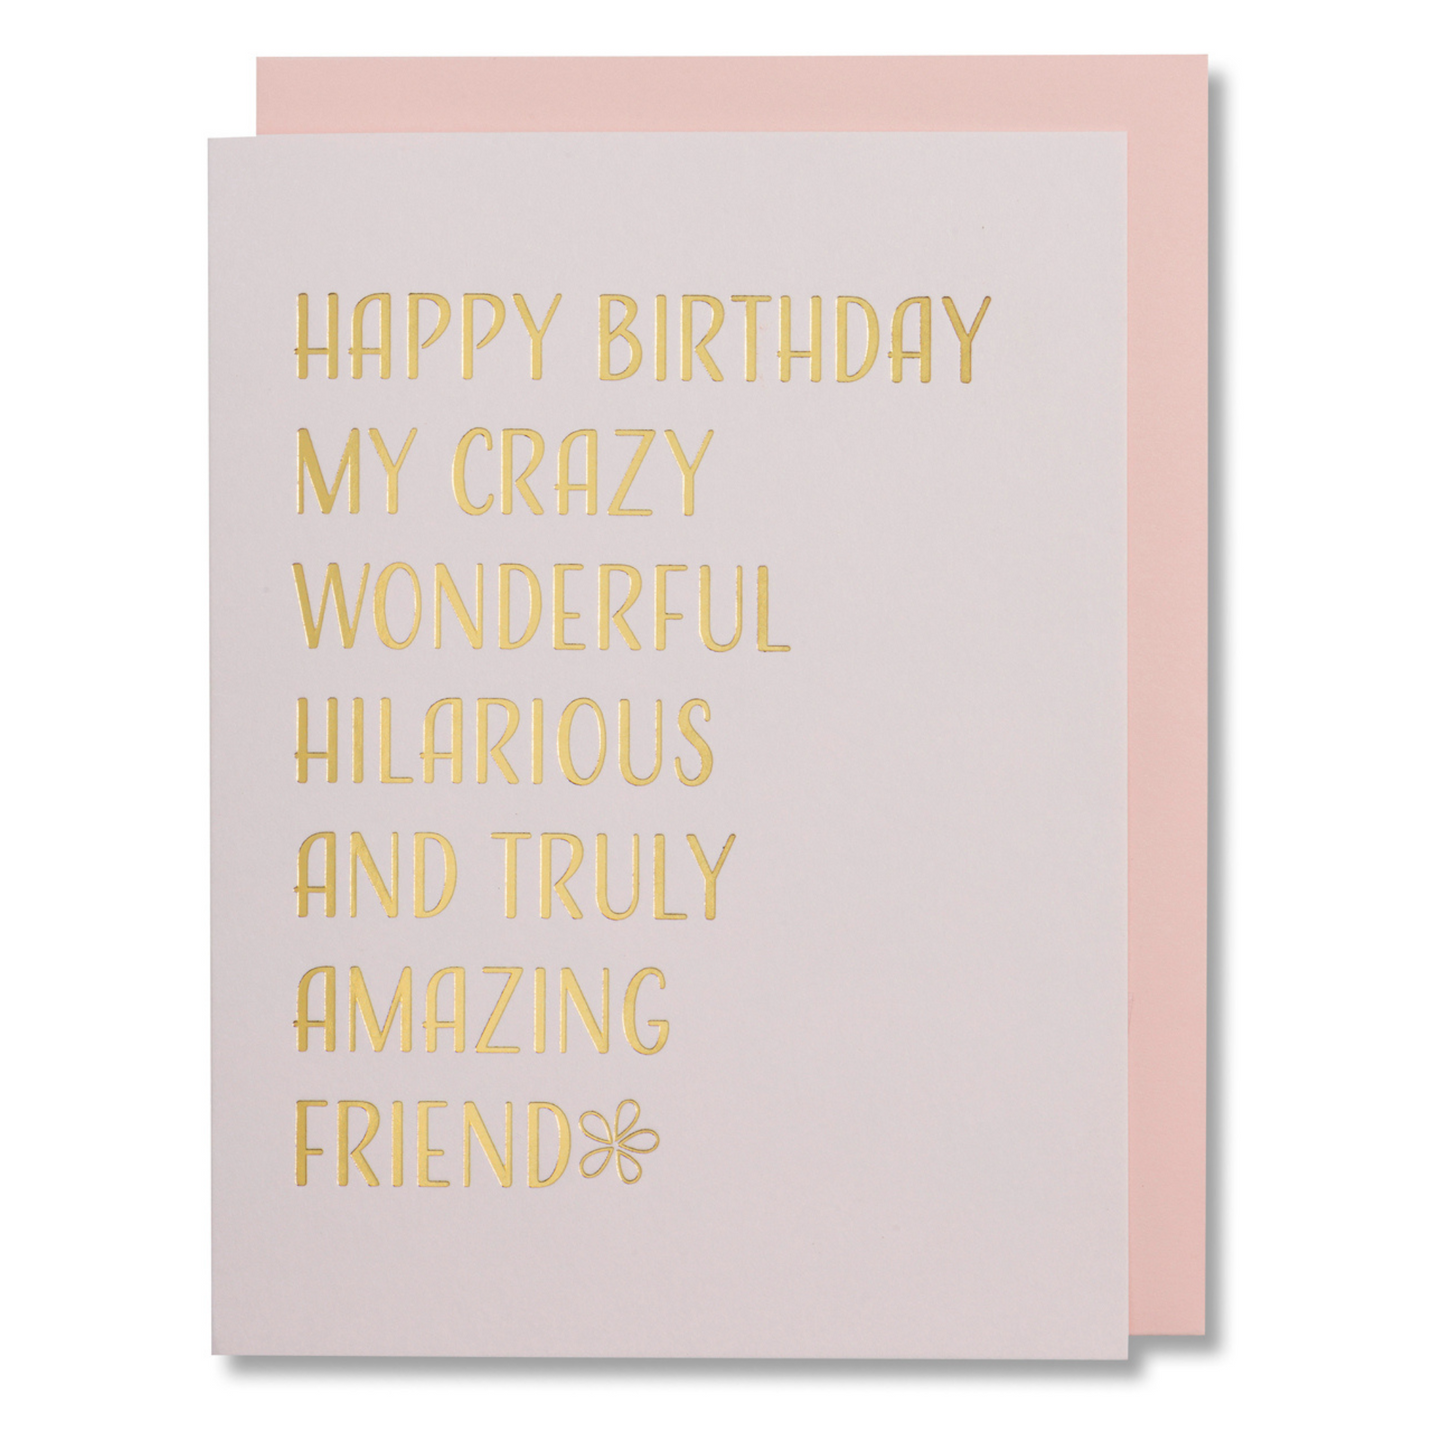 Birthday Best Friend Card, Hilarious Amazing Card For Girlfriend, Woman Card